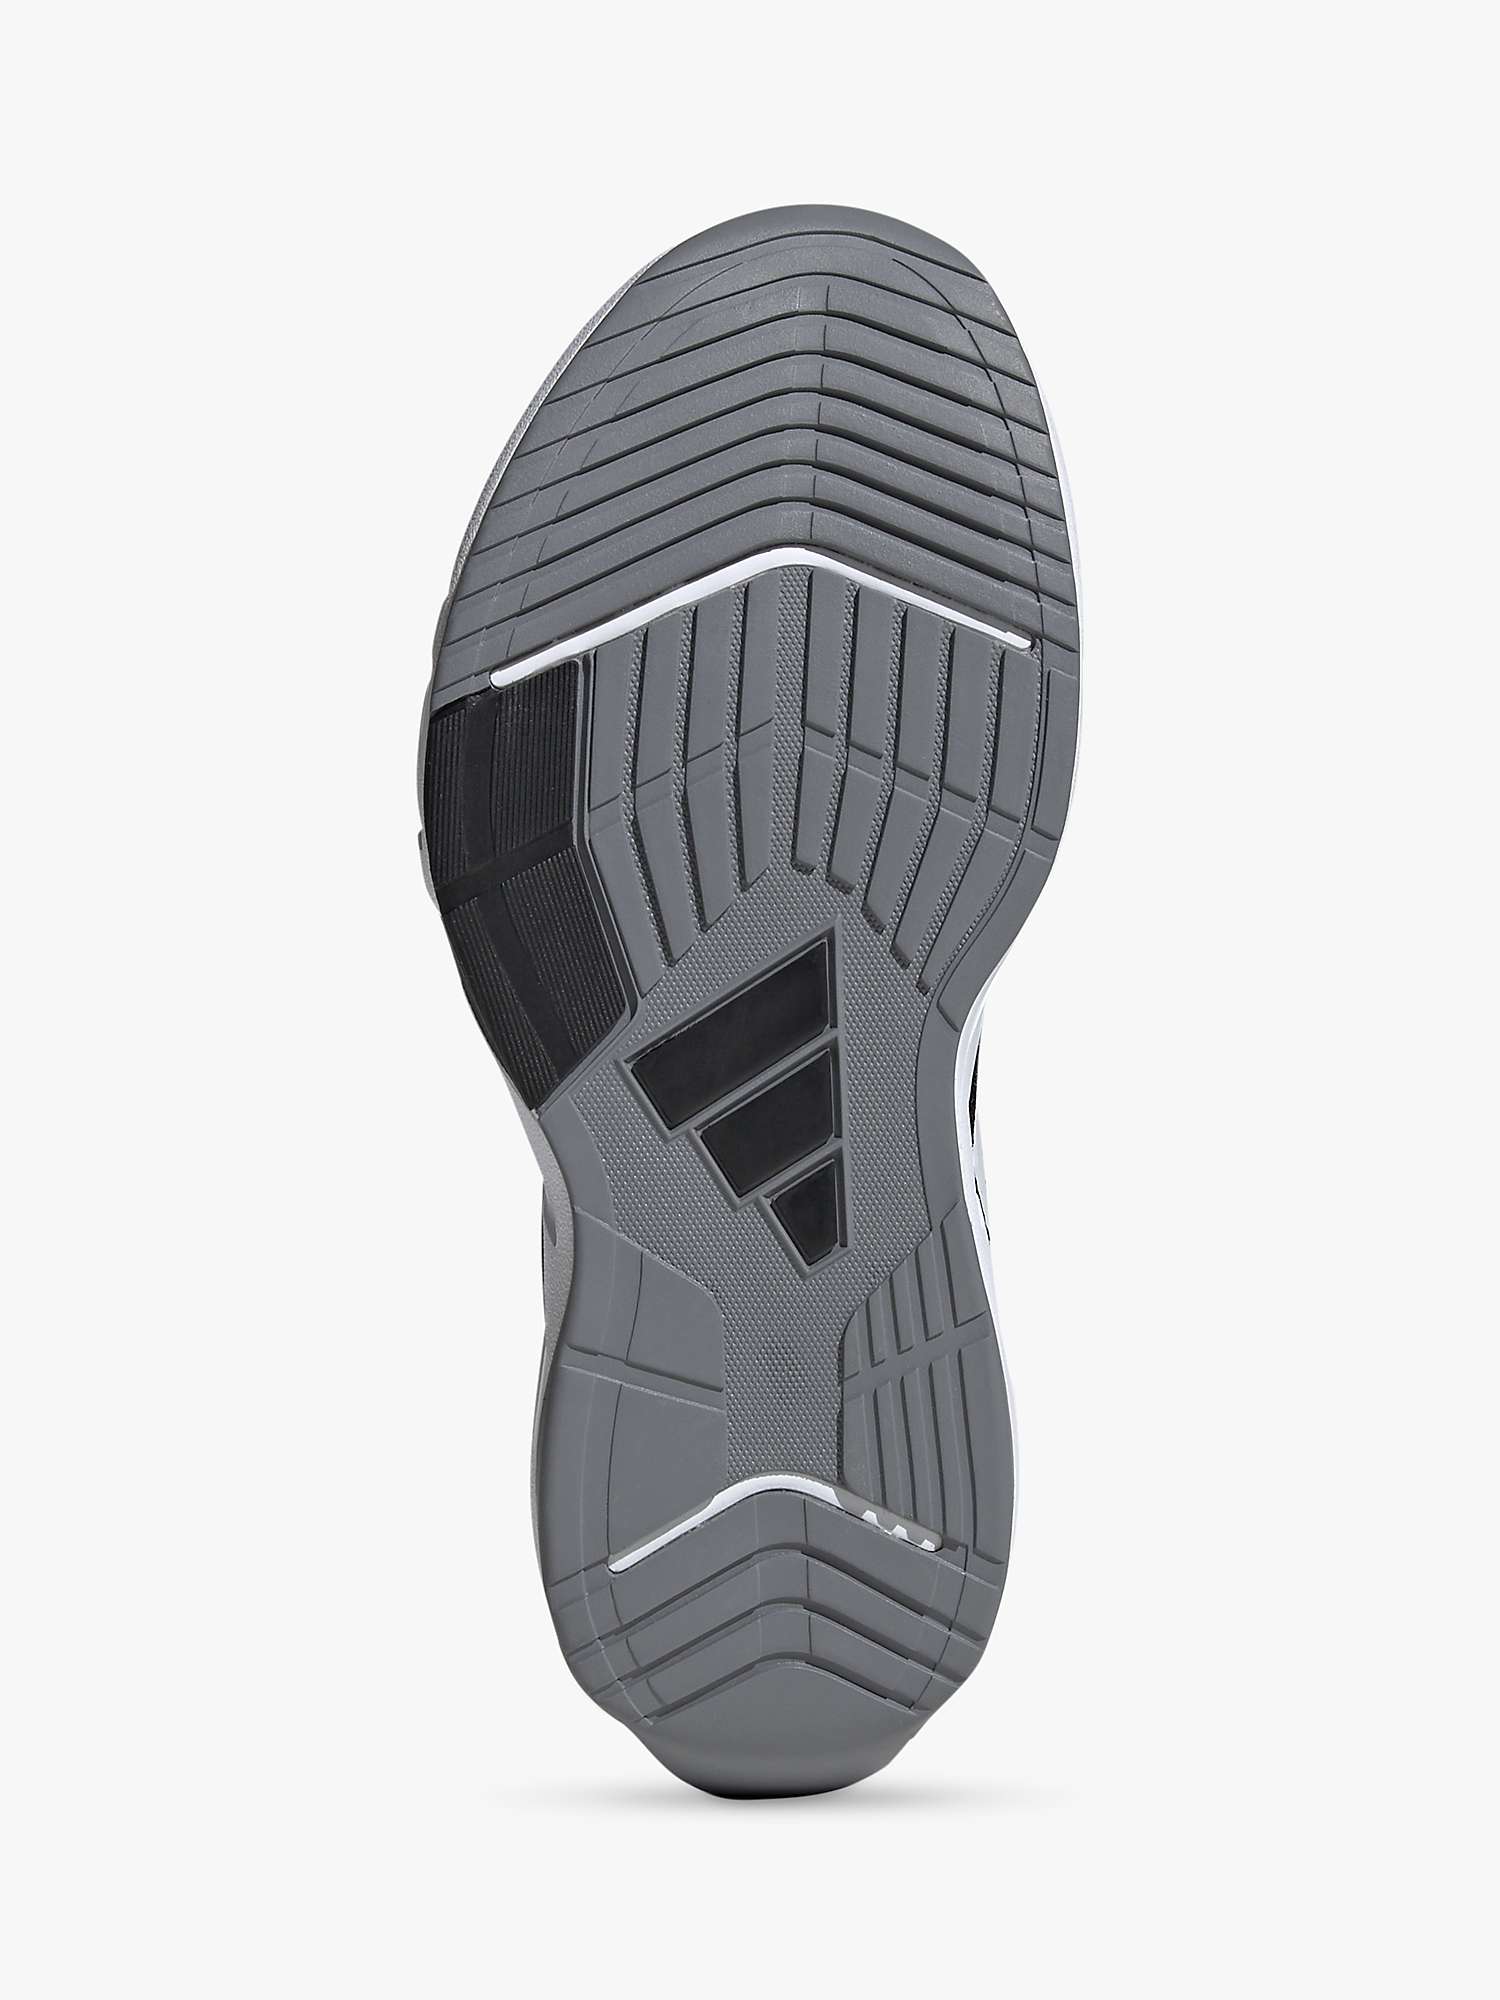 Buy adidas AMPLIMOVE Women's Running Shoes, Black/White Online at johnlewis.com